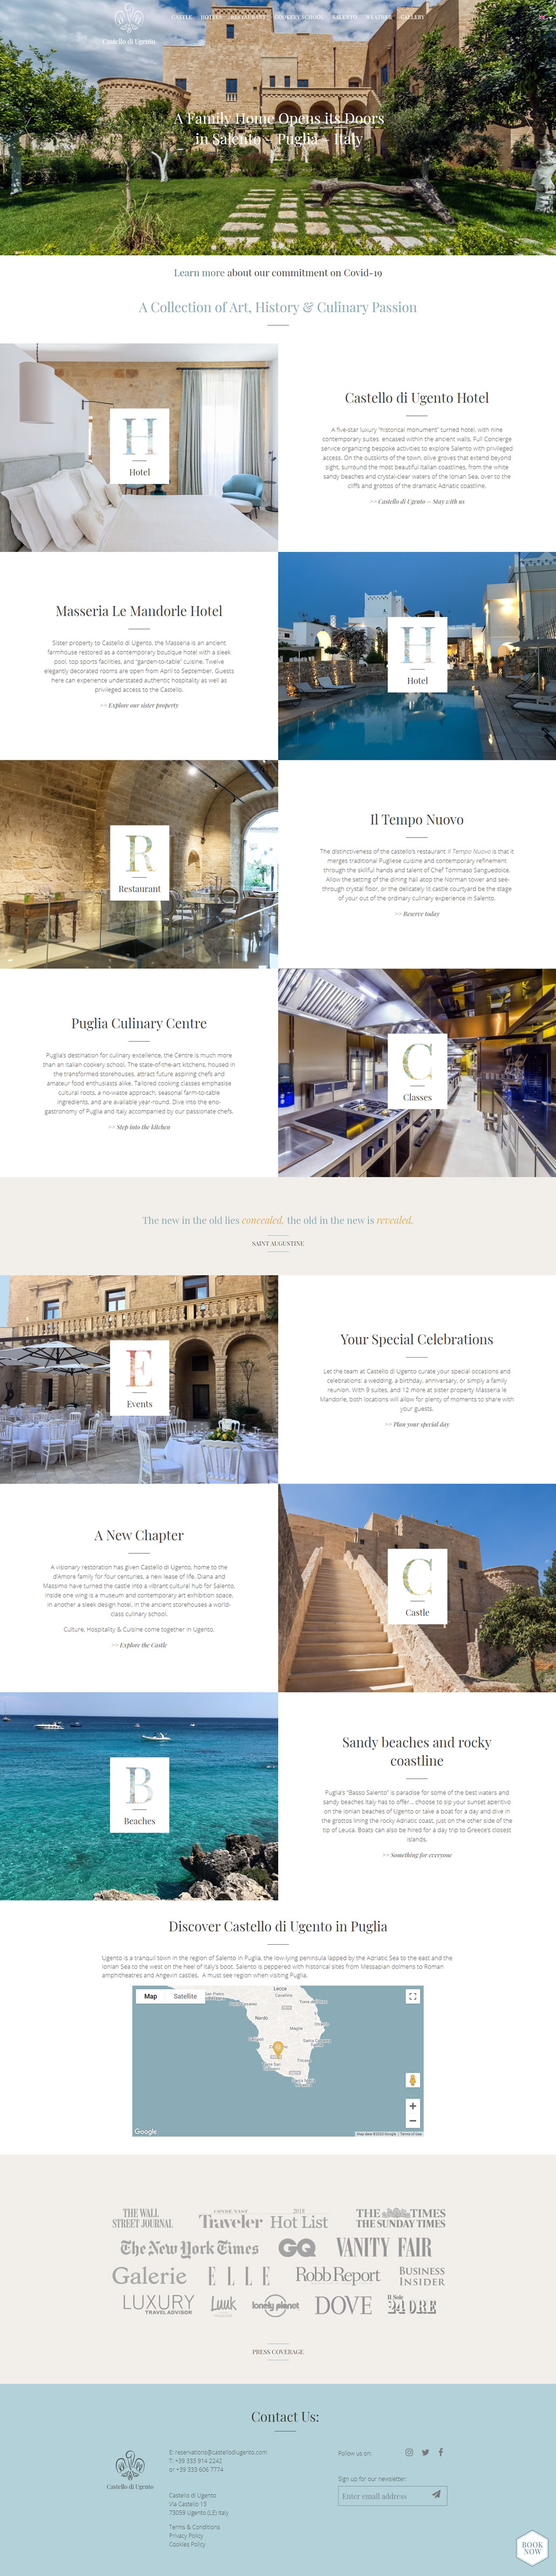 Castello di Ugento built using WordPress, web design by Convoy Media